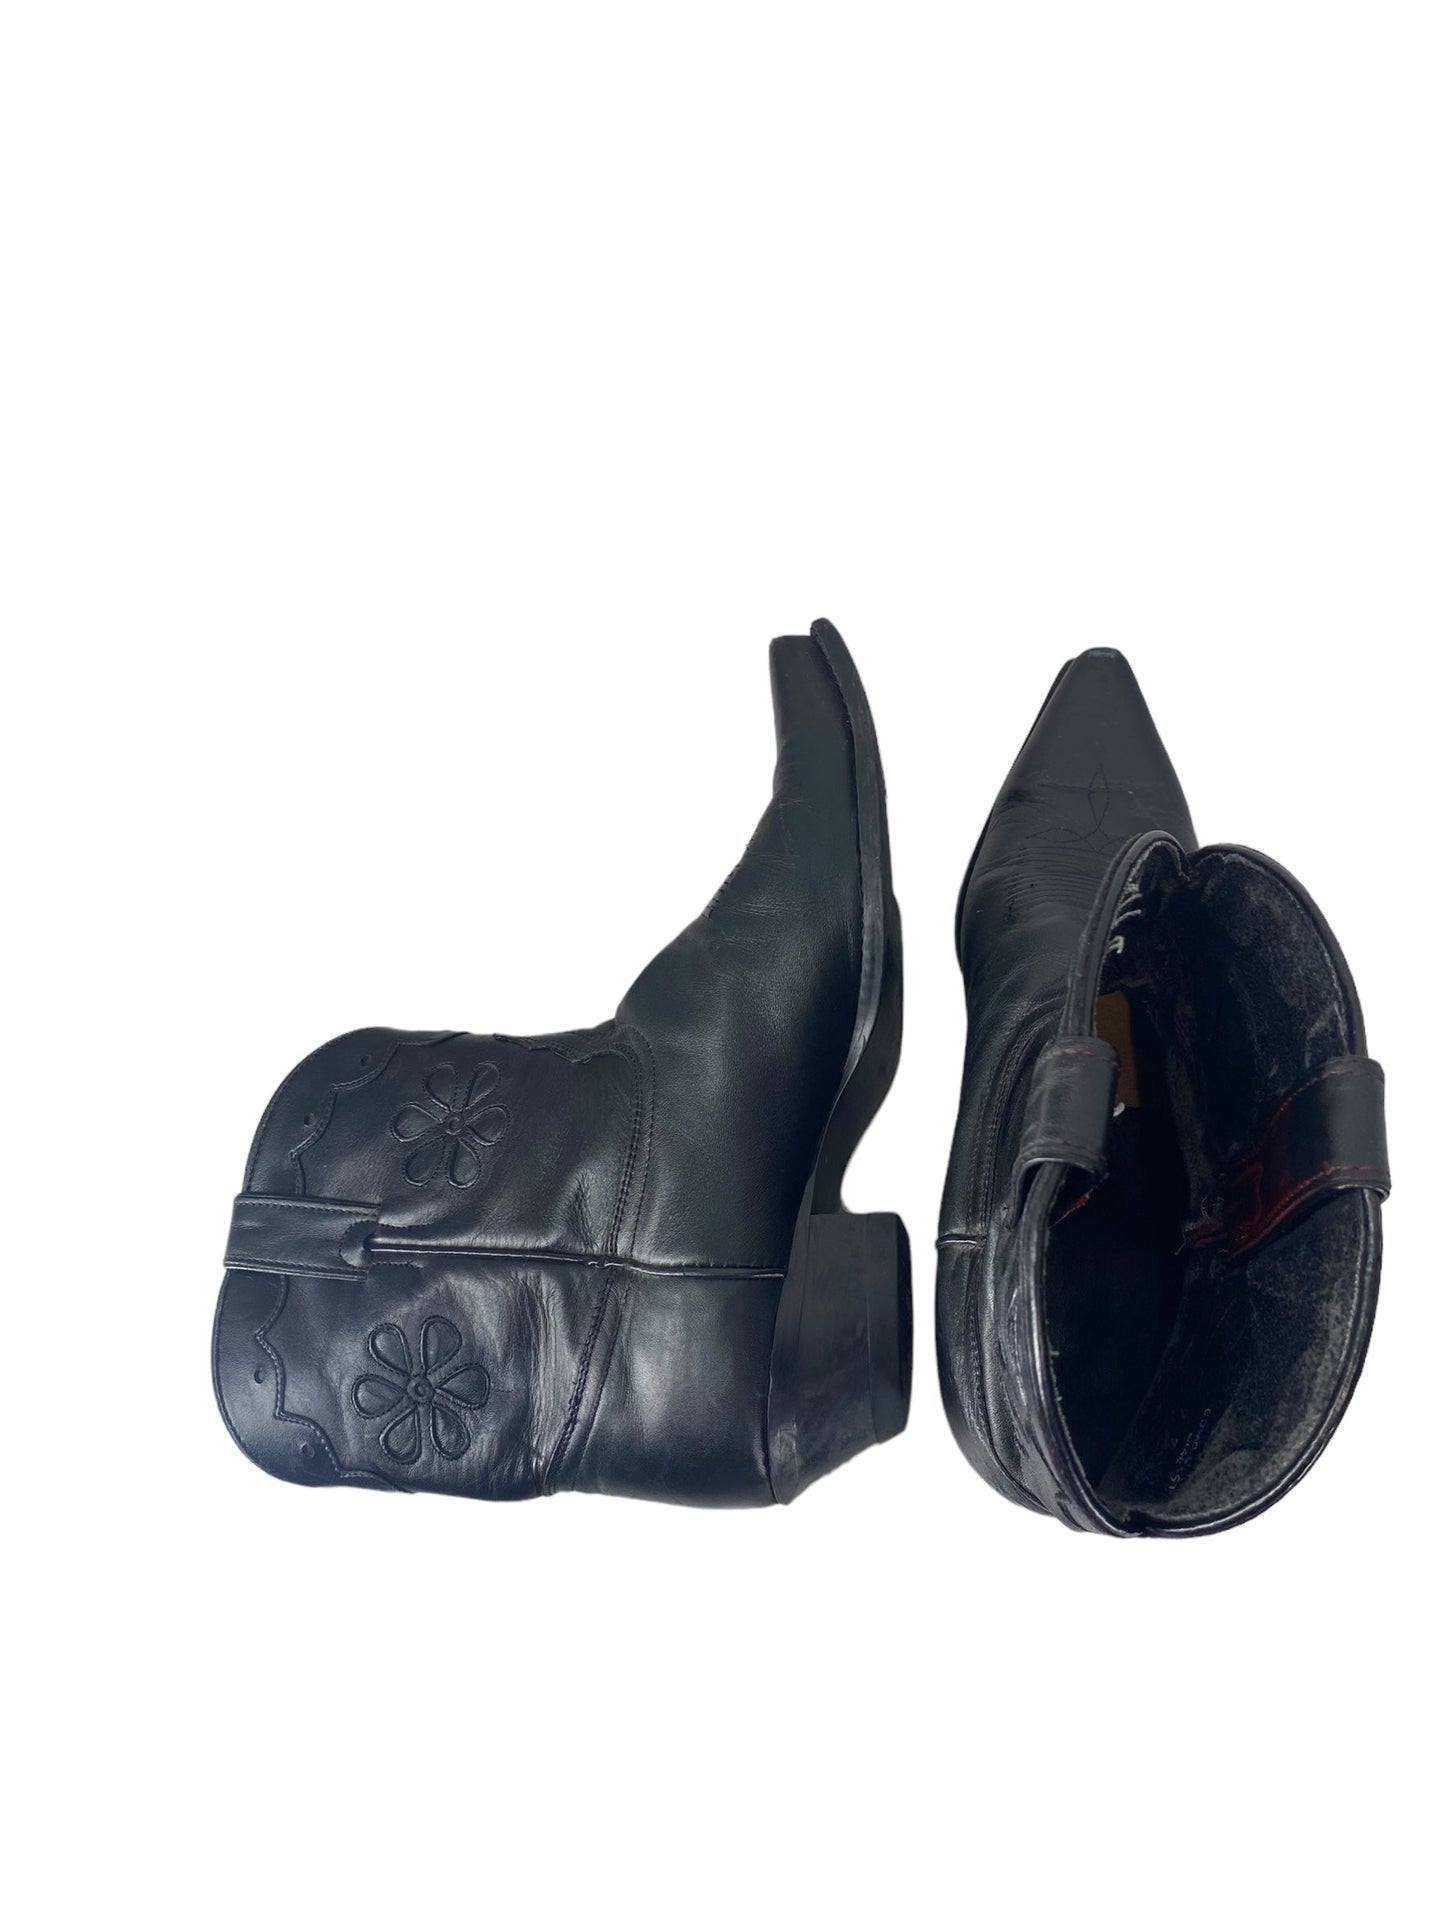 Black Boots Western Tony Lama, Size 9